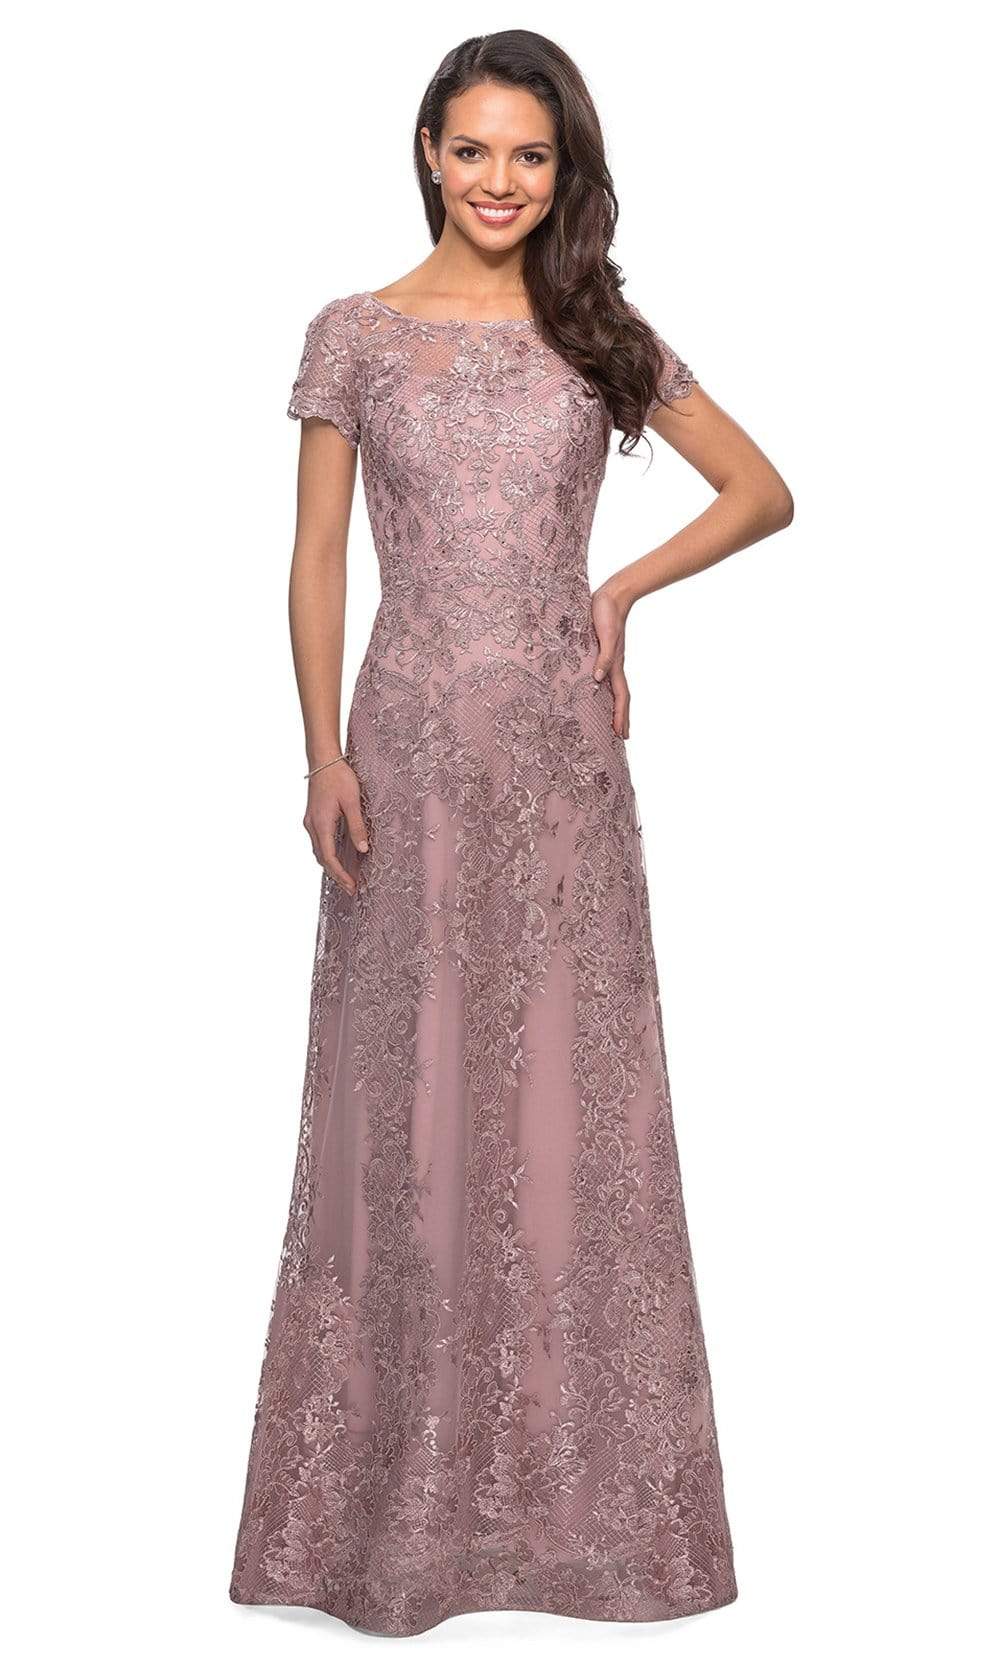 Image of La Femme - 27935 Illusion Neckline Beaded Lace Ornate A-Line Gown